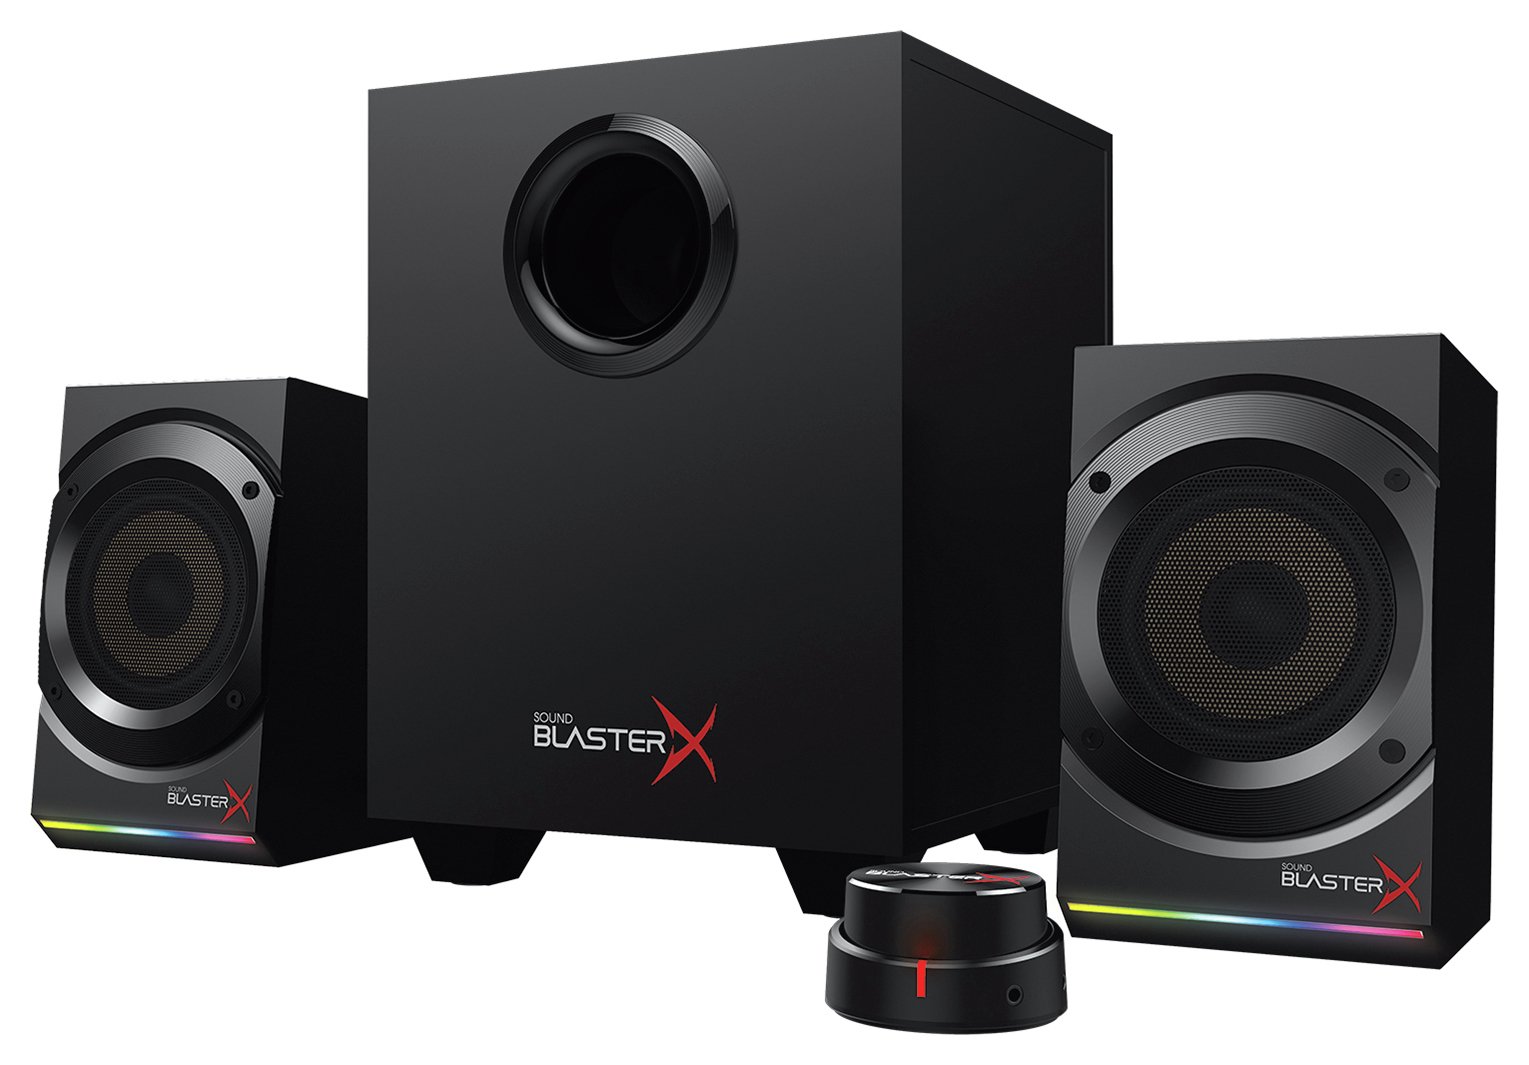 Creative Soundblaster X Kratos S5 2.1 Speakers - Black